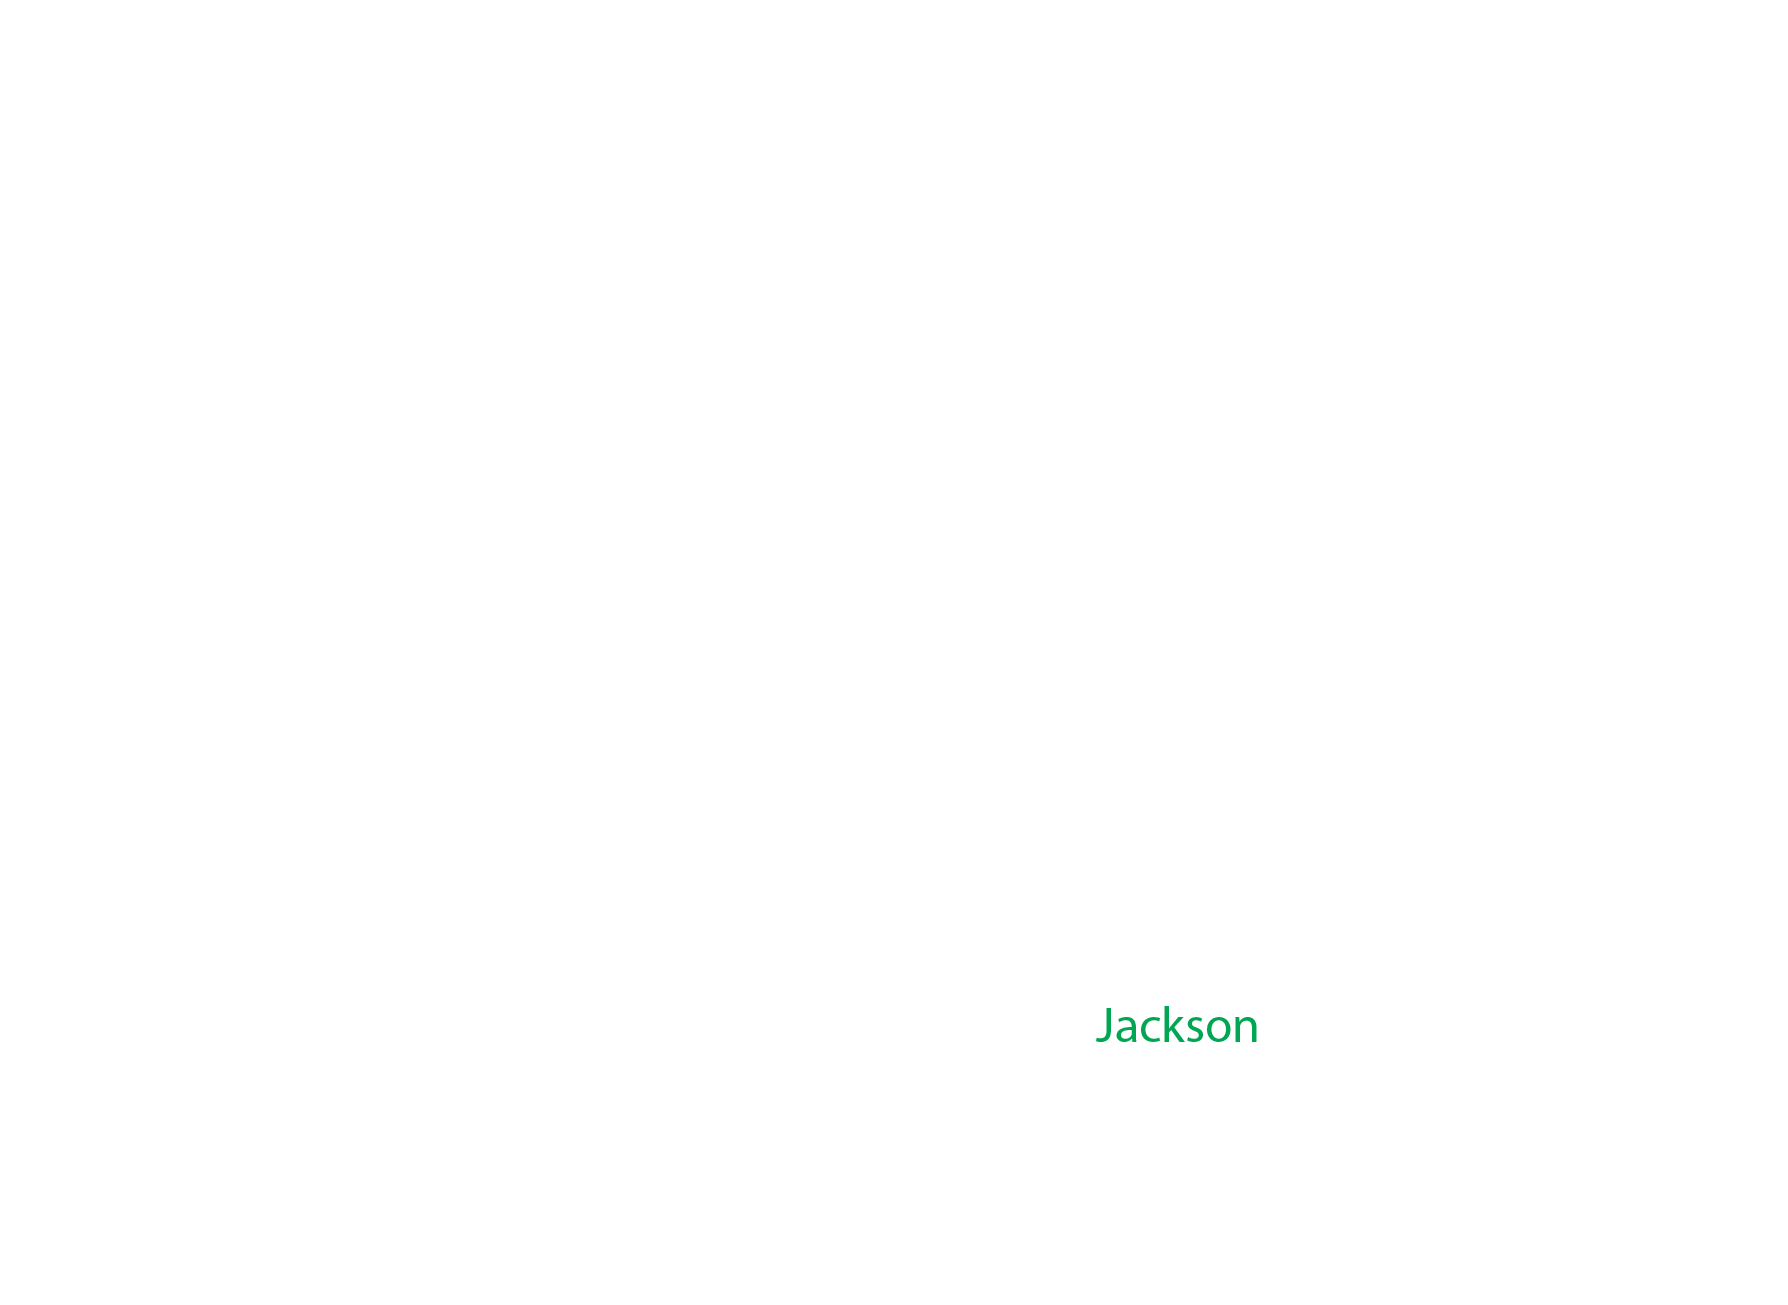 Jackson label